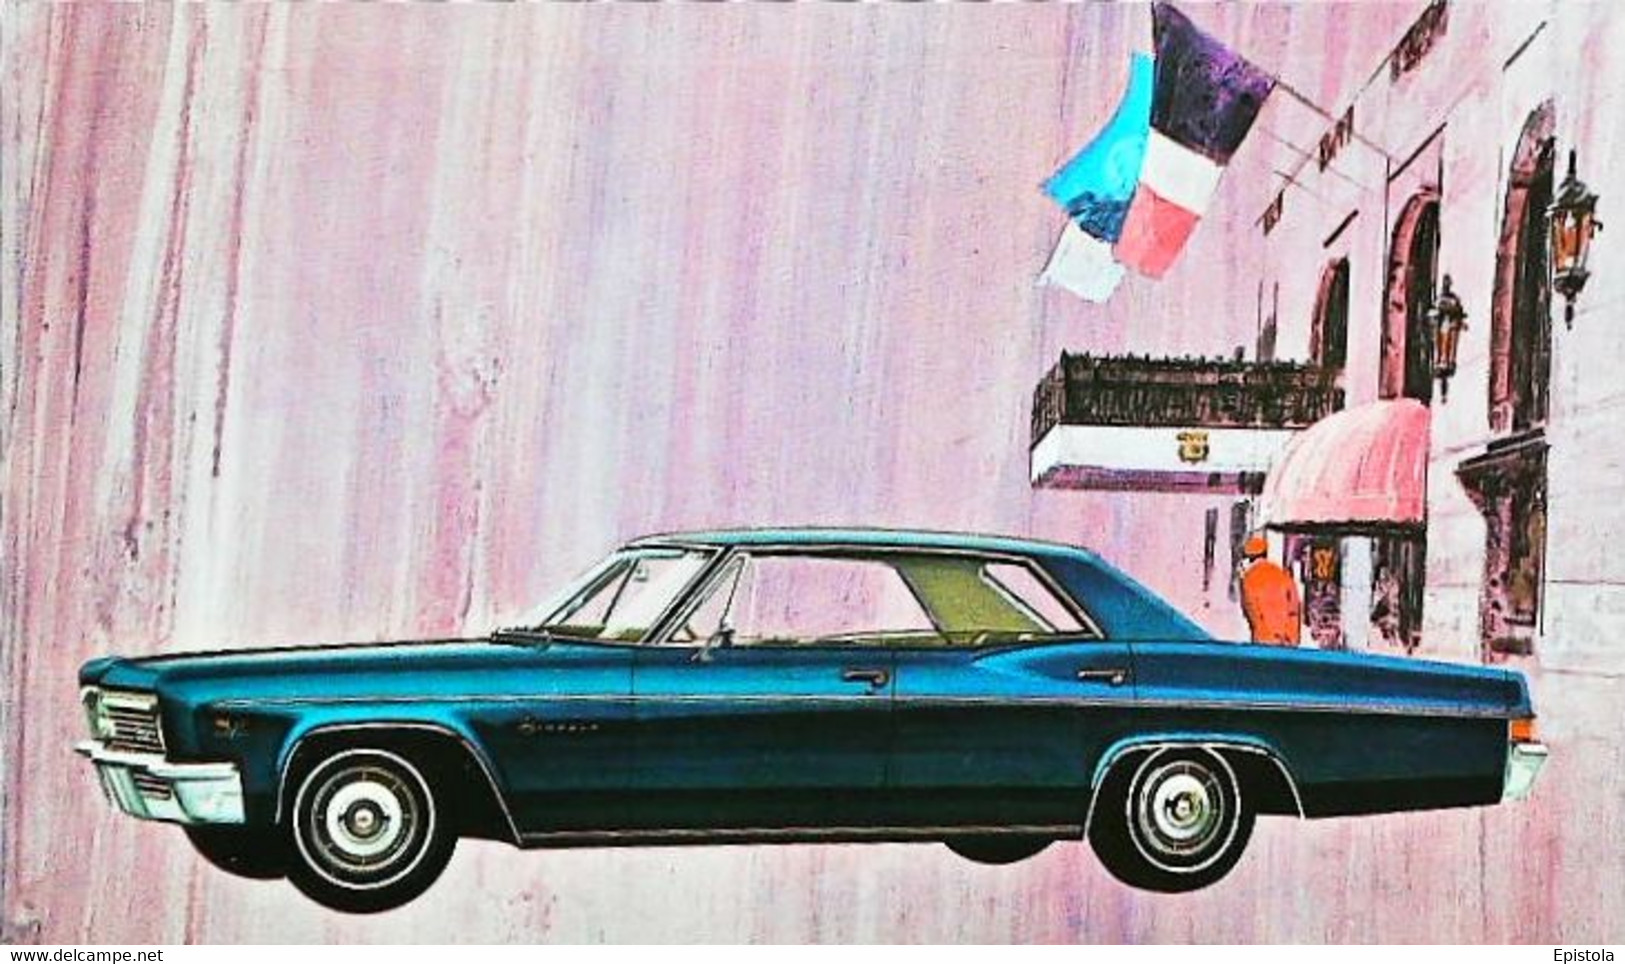 ► CHEVROLET Impala Sport Sedan 1966   -  Automobile Chevrolet (Litho. U.S.A.) - American Roadside